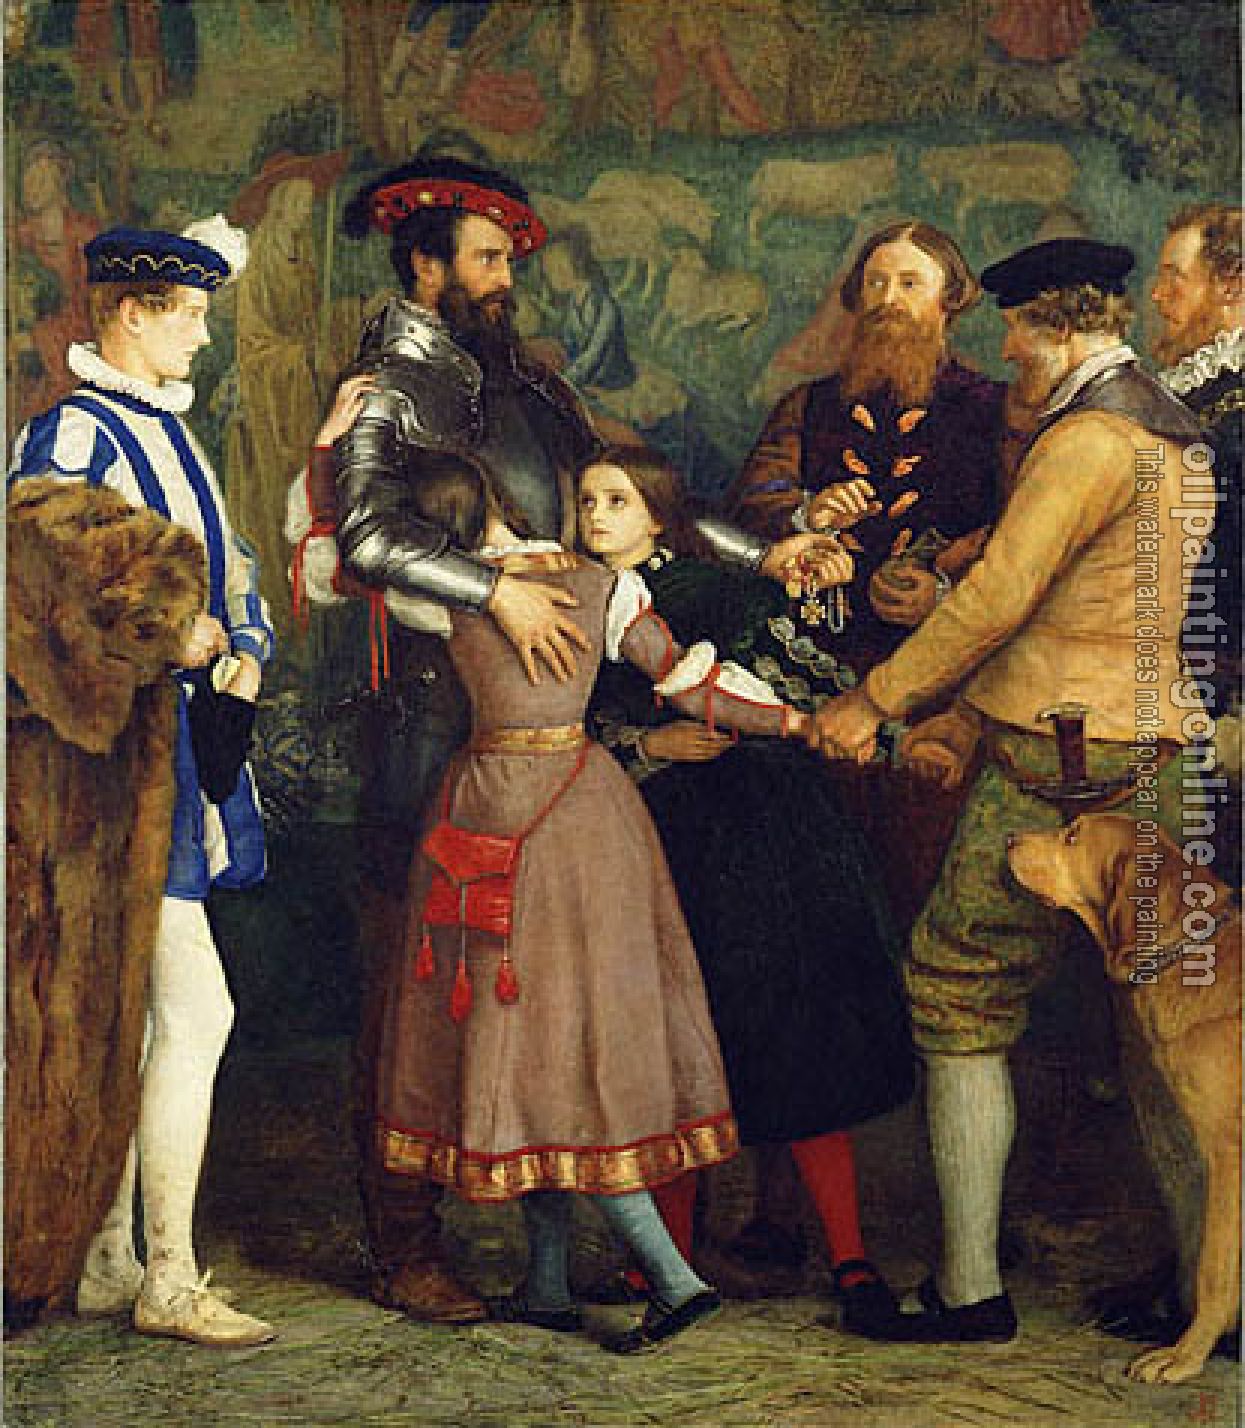 Millais, Sir John Everett - The Ransom